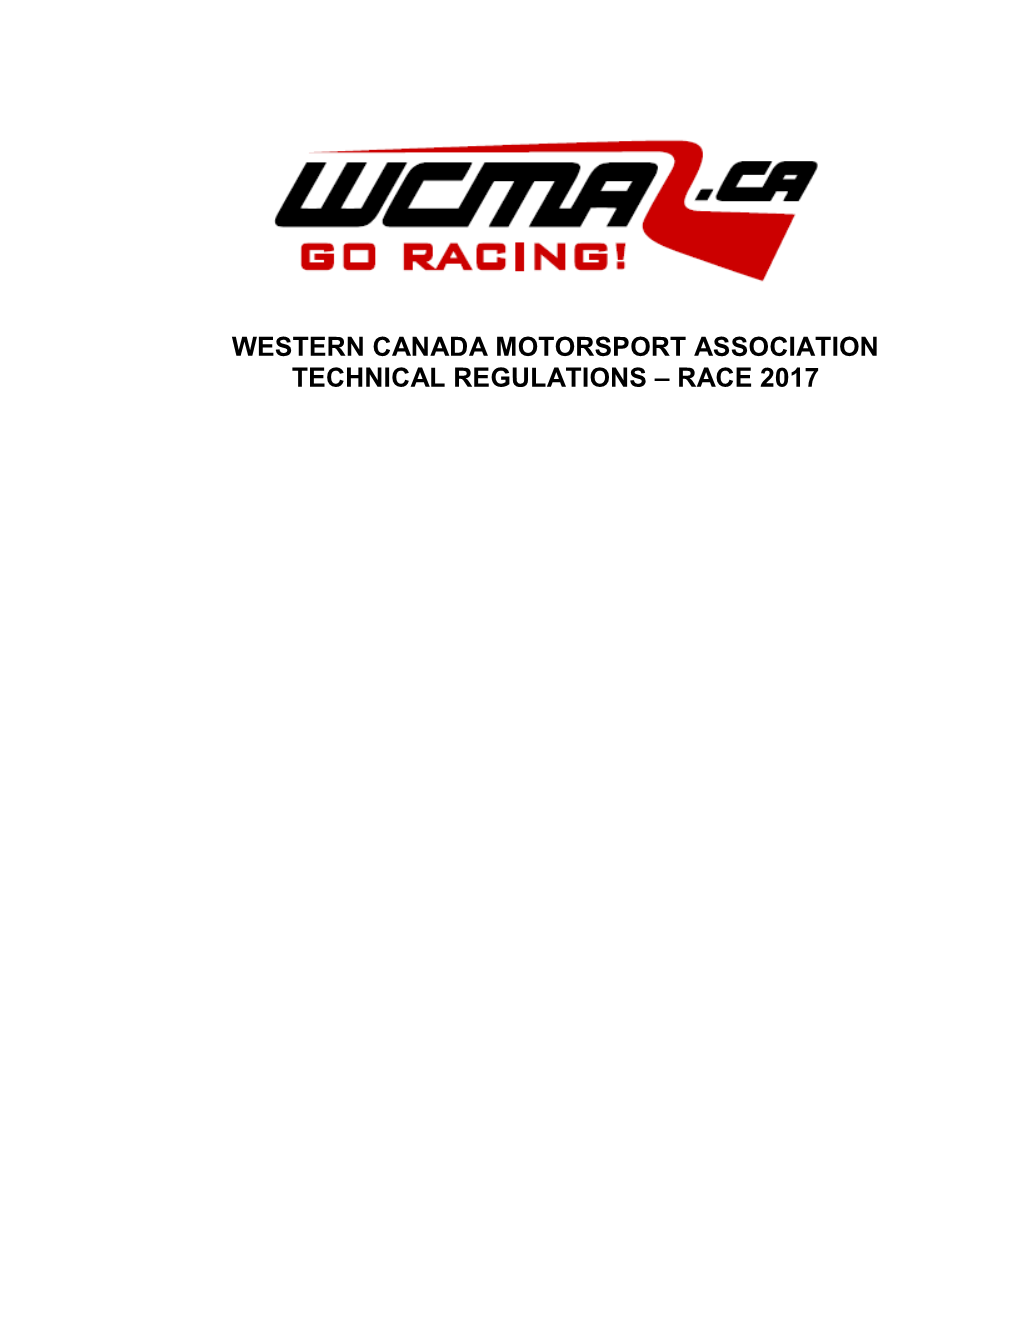 Western Canada Motorsport Association Technical Regulations – Race 2017